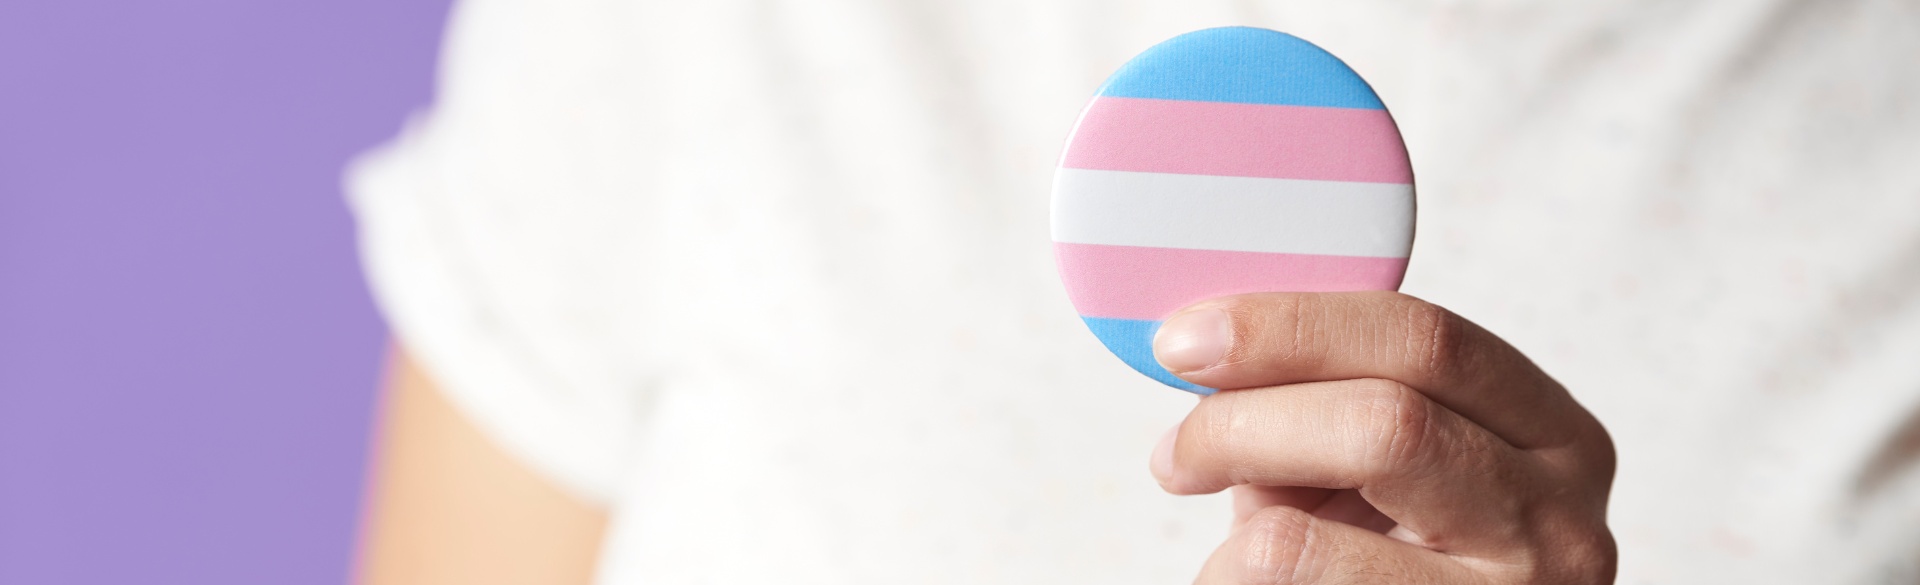 Person holding transgender flag button